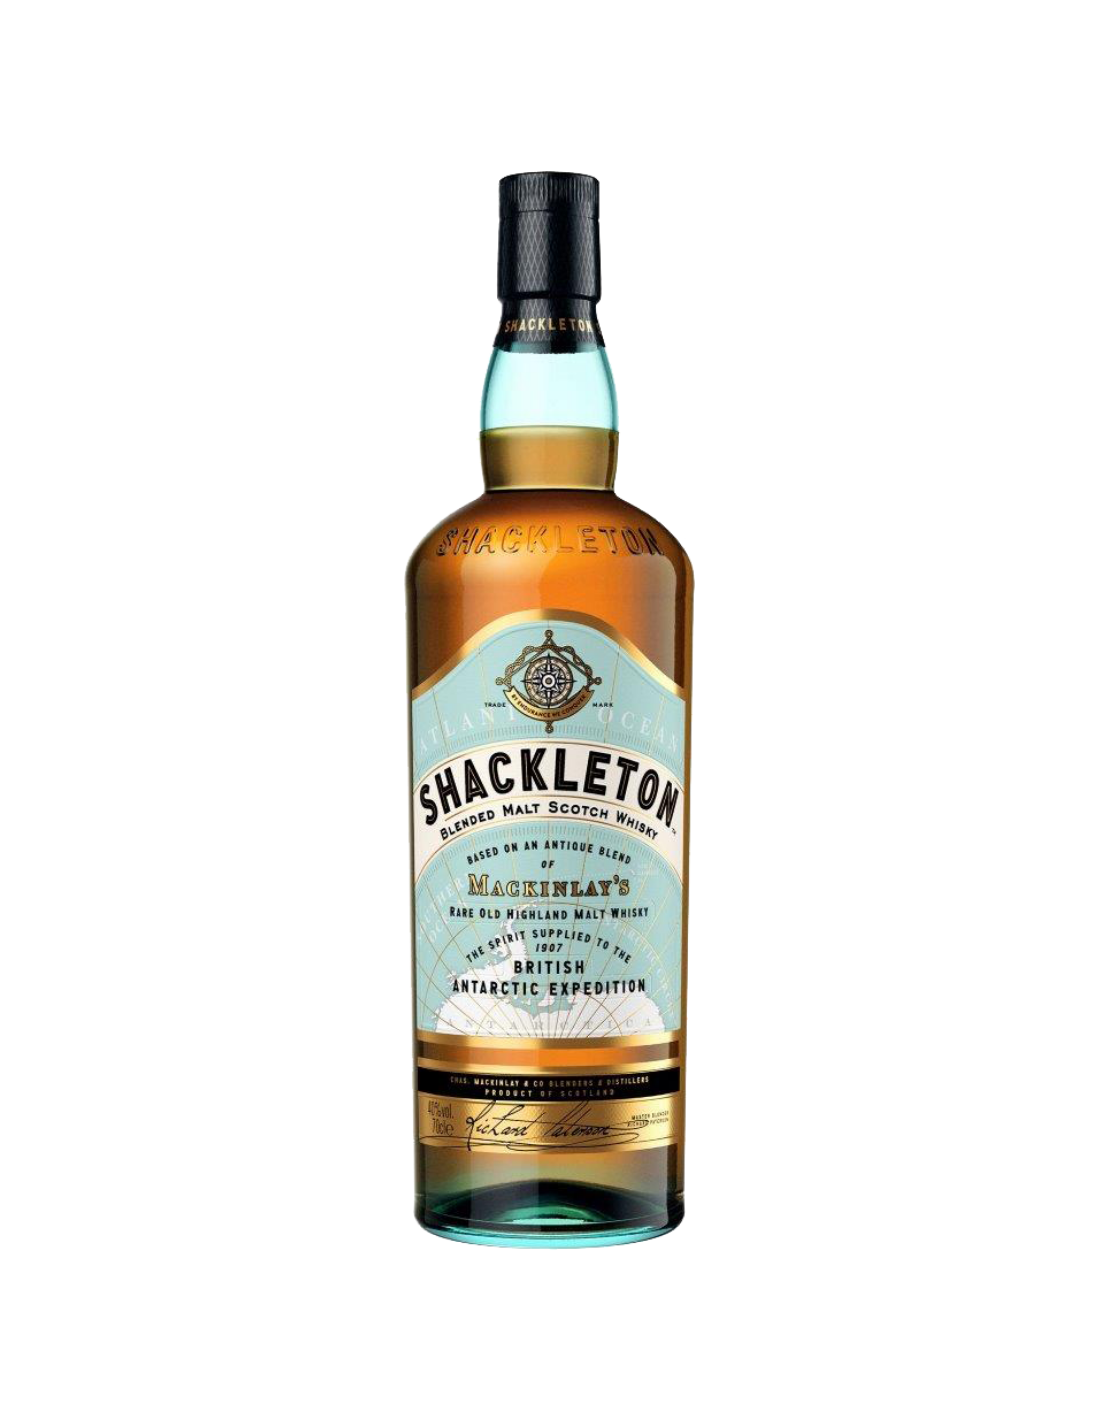 Whisky Shackleton Blended Malt Scotch, 0.7L, 40% alc., Scotia alcooldiscount.ro